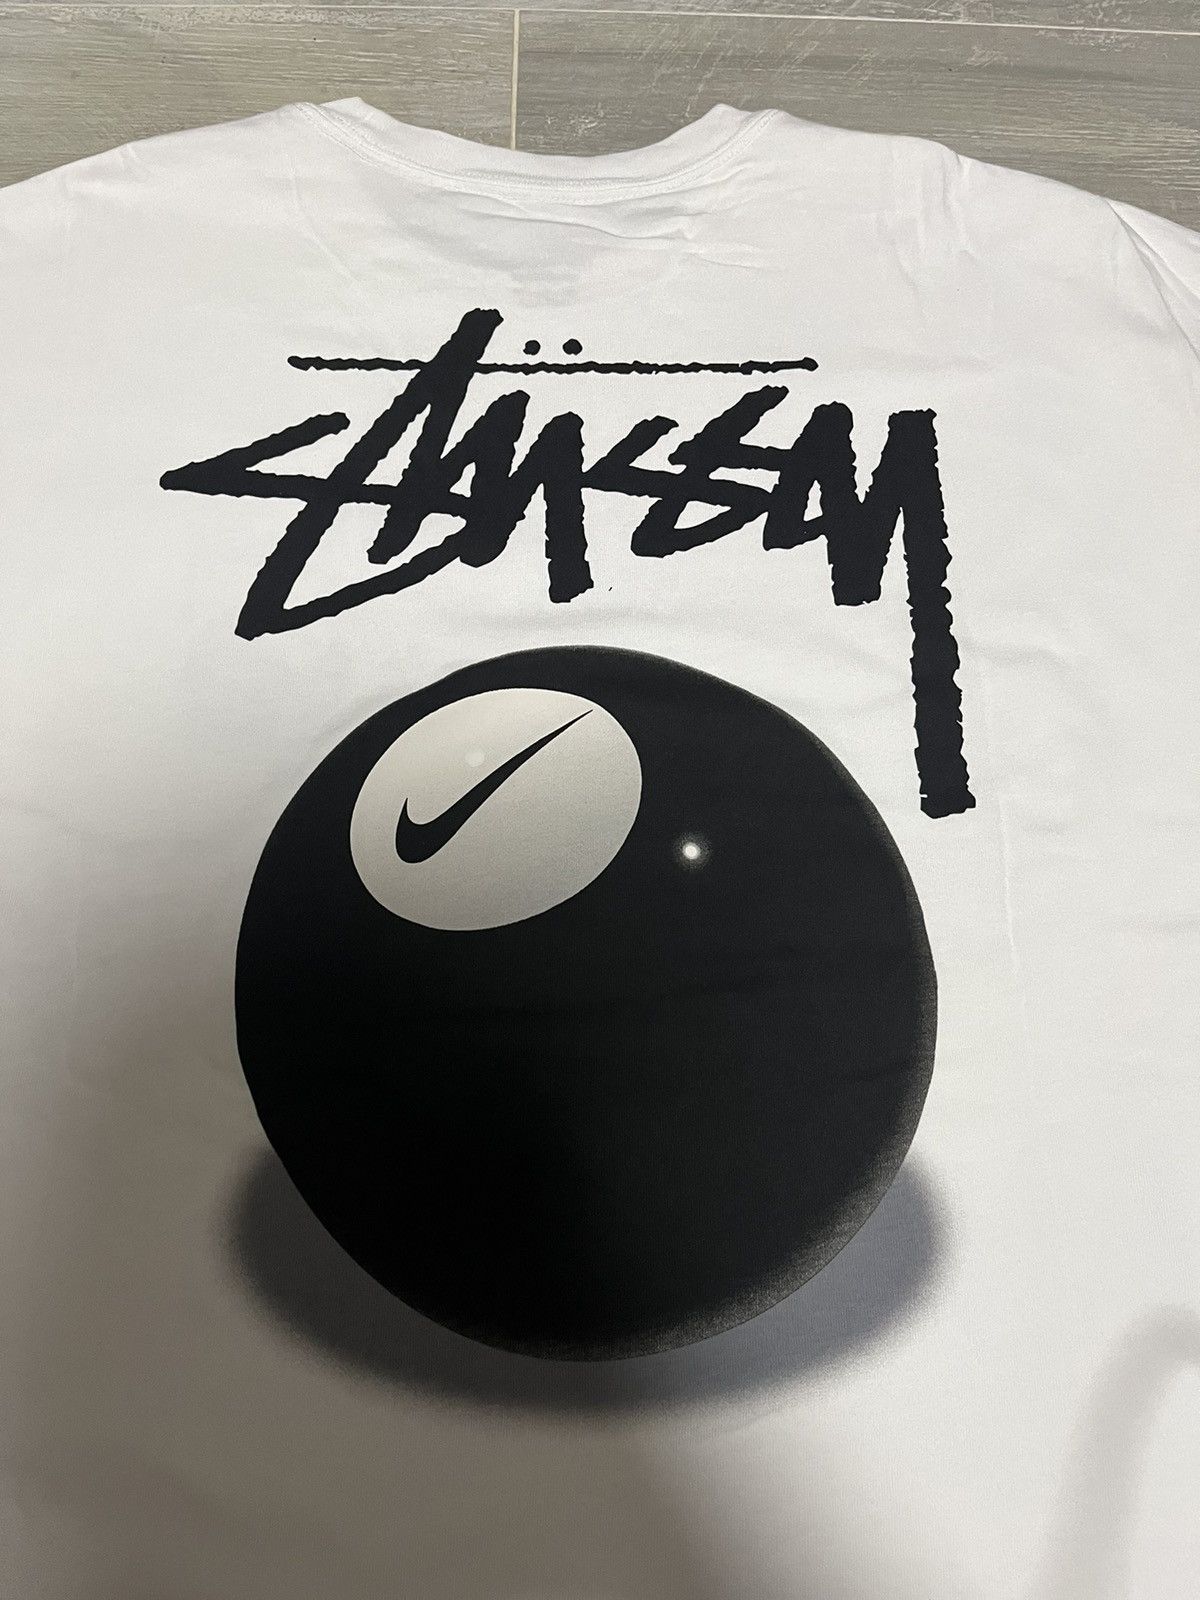 Nike Nike stussy 8 ball tee eight ball supreme palace fuct | Grailed